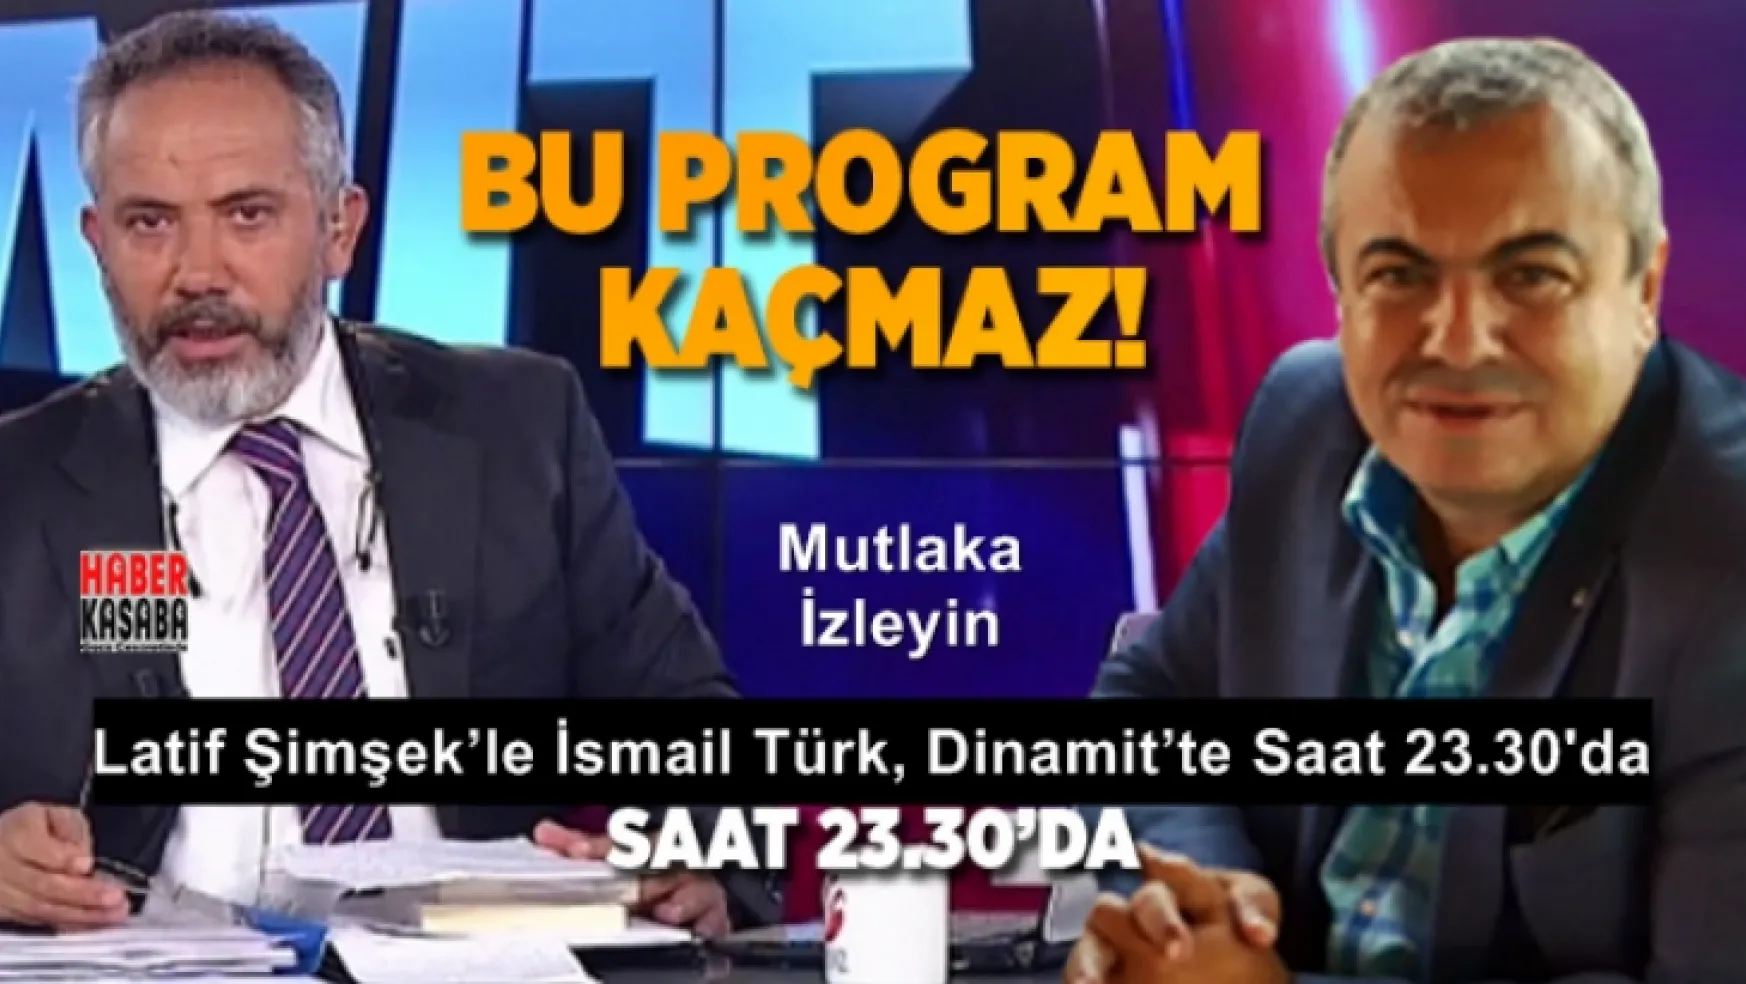 Latif Şimşek'le İsmail Türk, Dinamit'te Saat 23.30'da